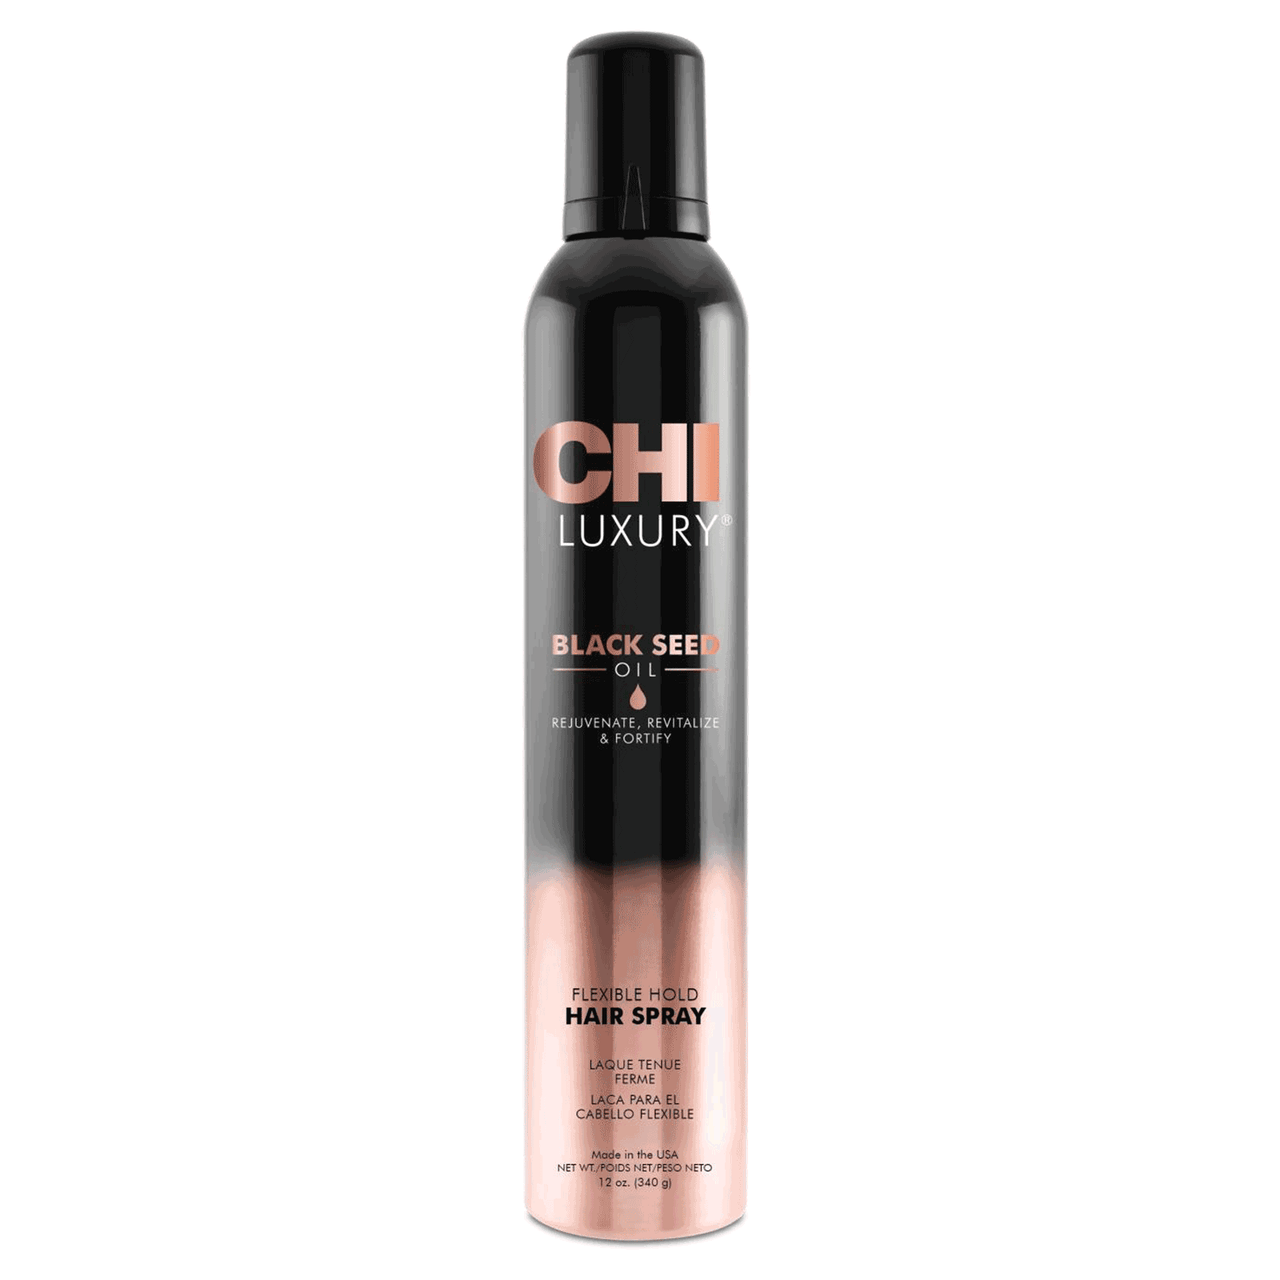 CHI CHI - Black Seed Flexible Hold Hairspray 12 fl. oz.